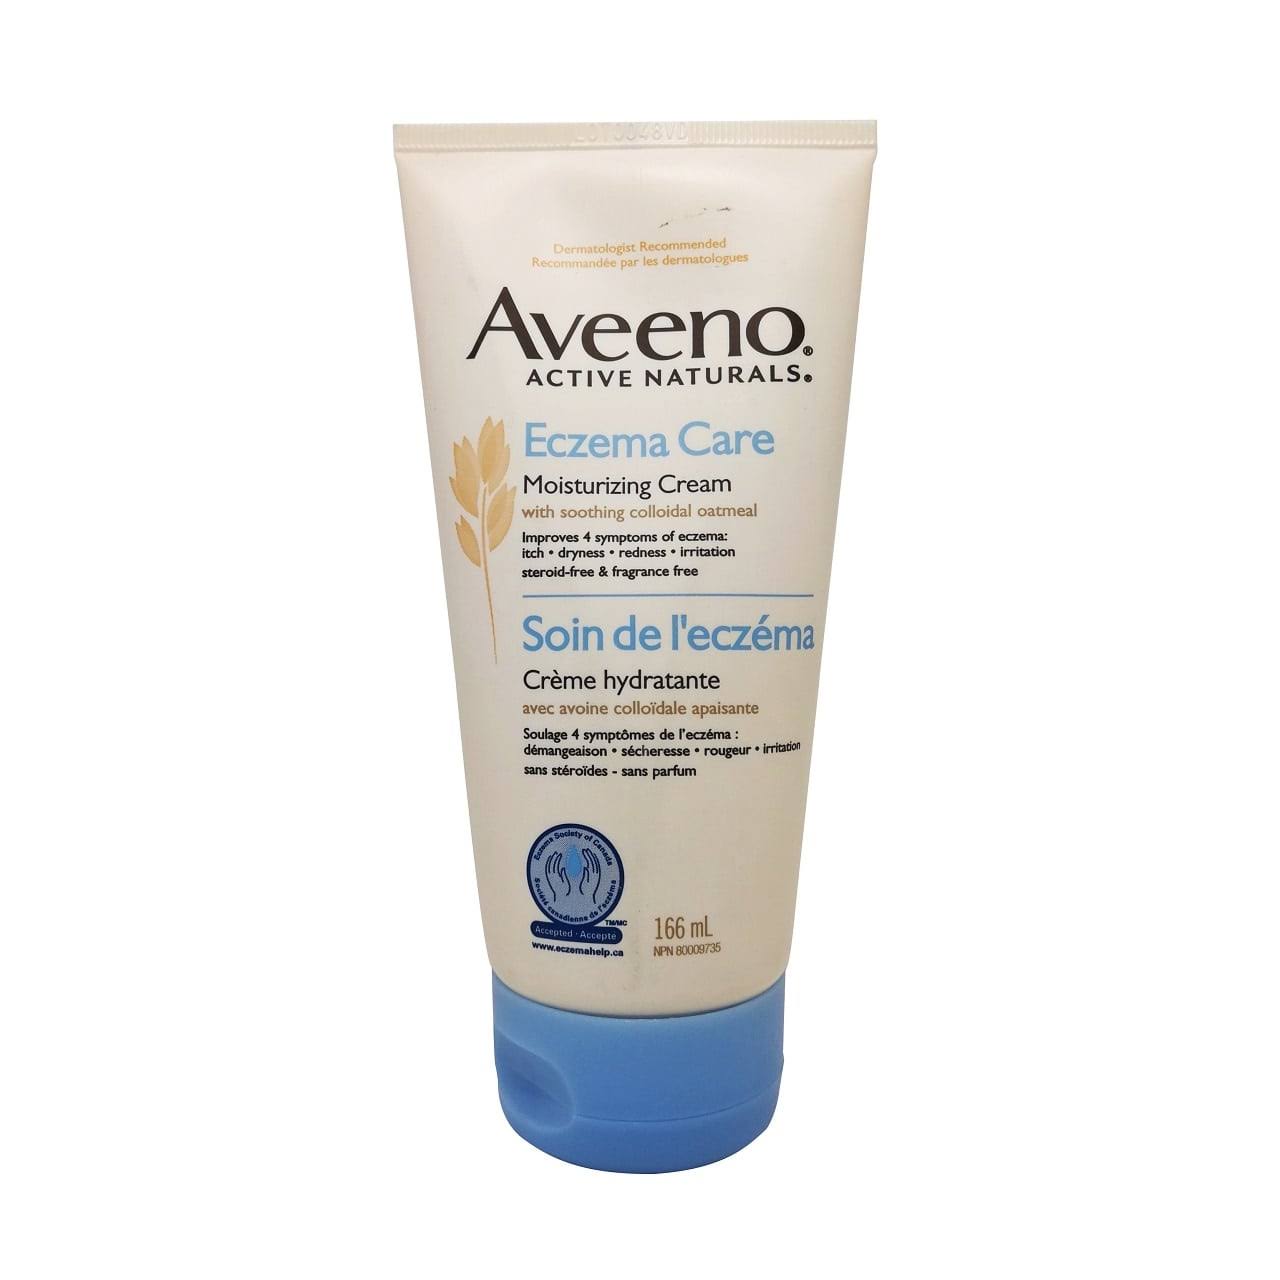 Aveeno Eczema Care Moisturizing Cream (166 mL)